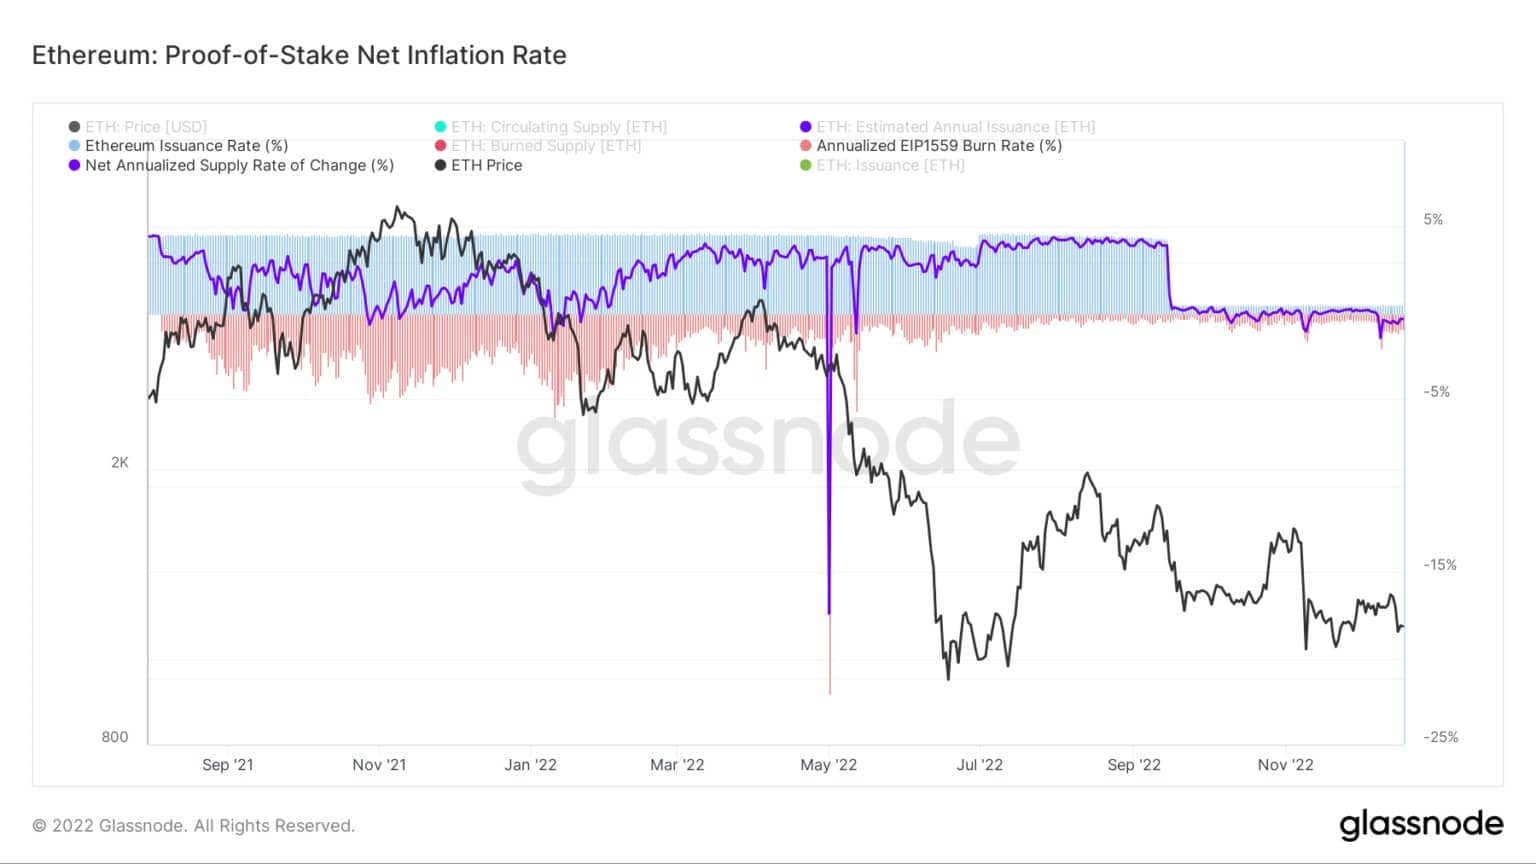 Ethereum: Proof of Stake Net Inflation Rate / Bron: Glassnode.com